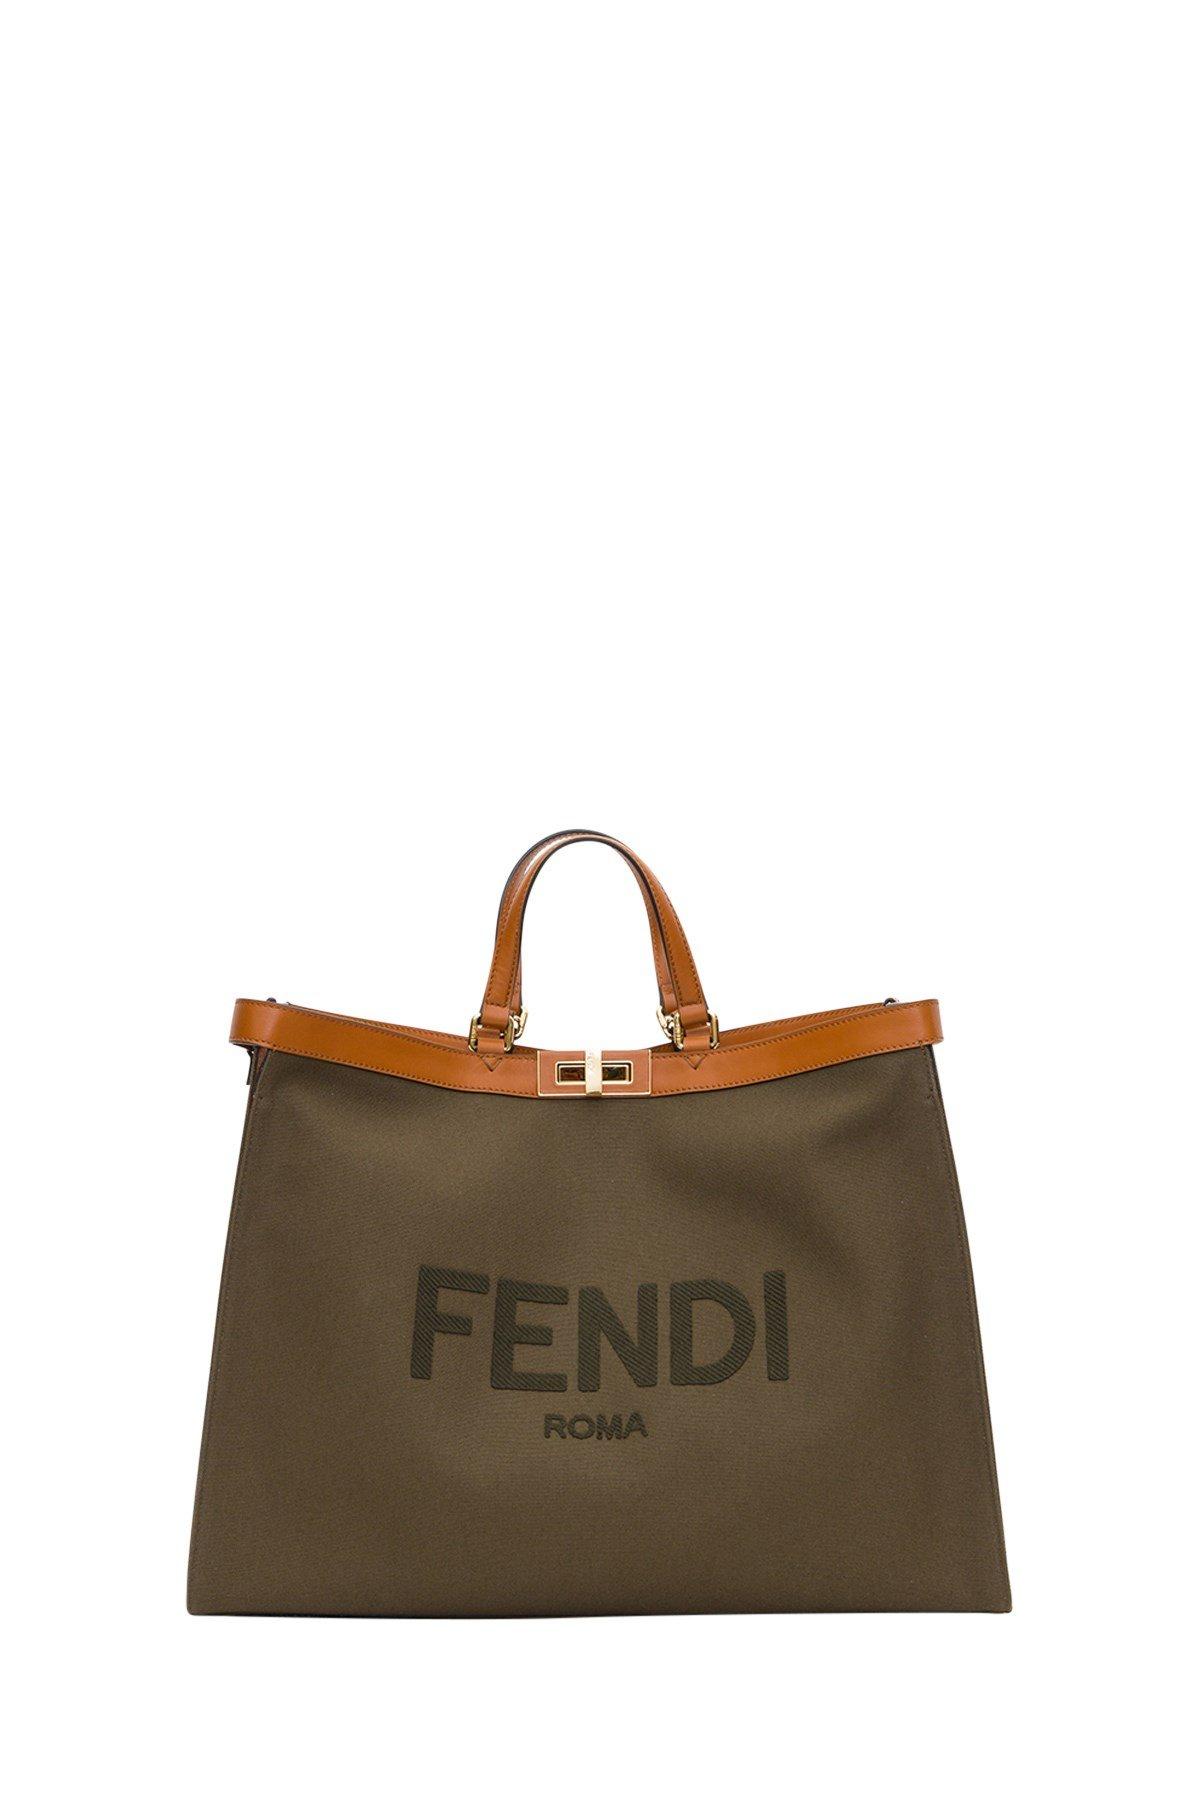 Fendi, Bags, Large Fendi Tote